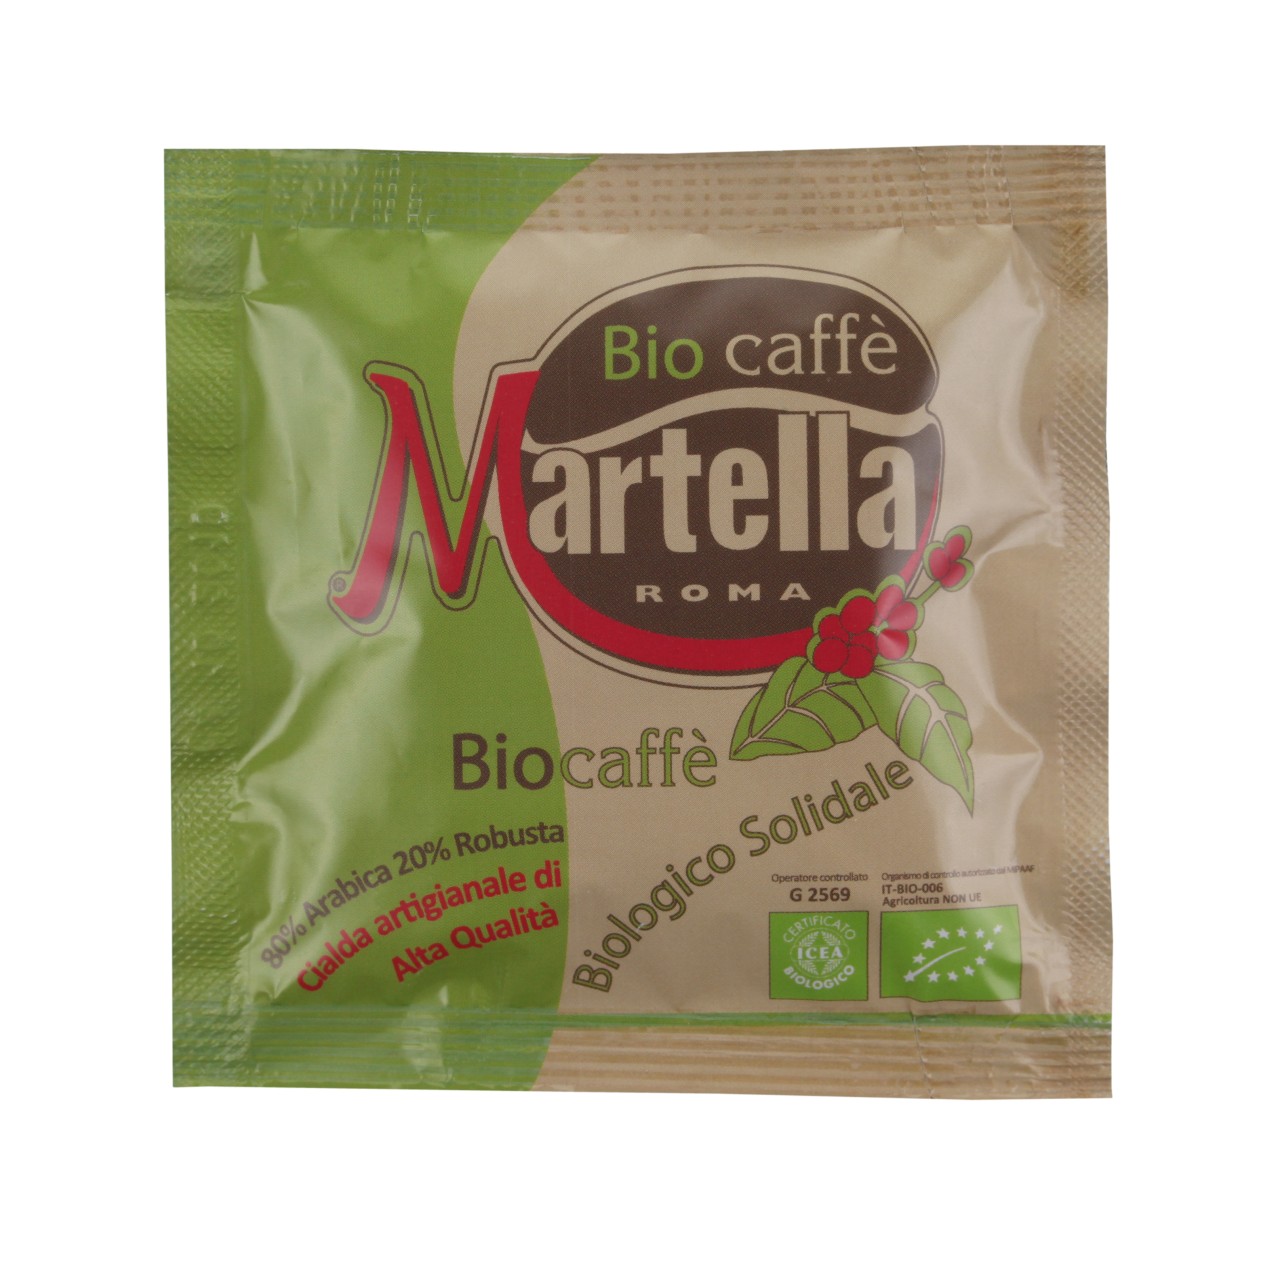 Martella Organic Pads: 10 Pieces